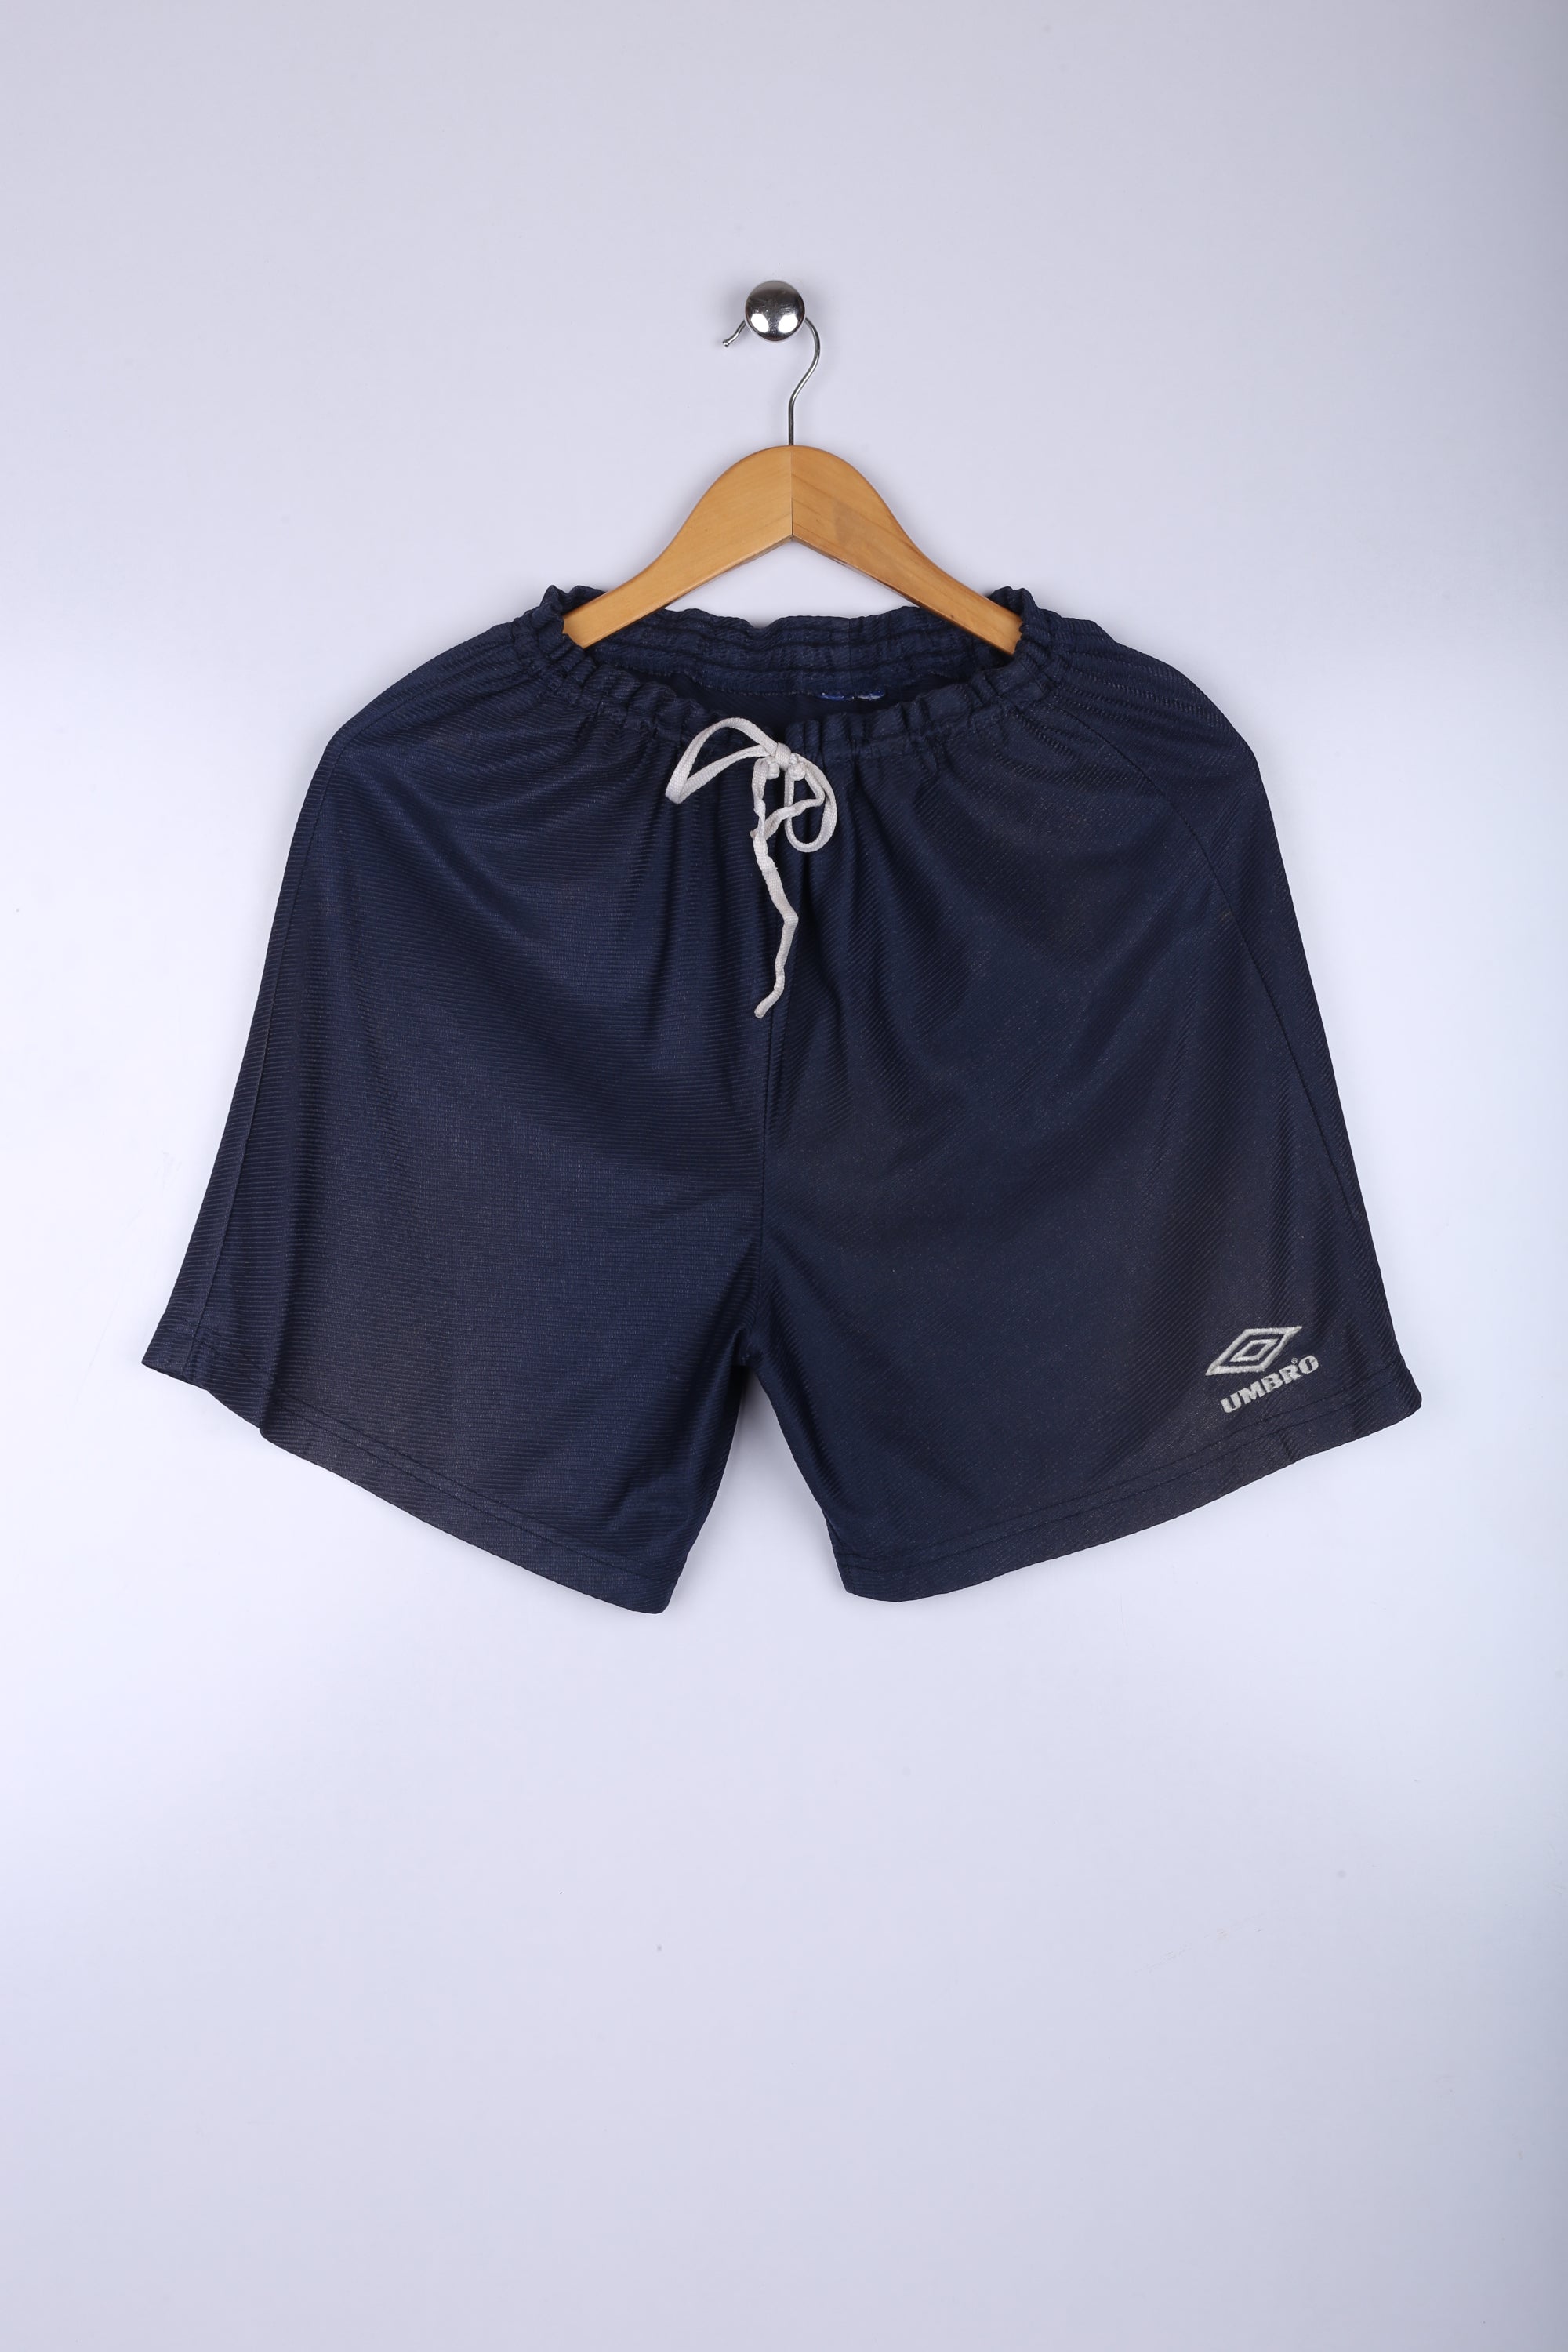 Vintage 90's Umbro Shorts Navy